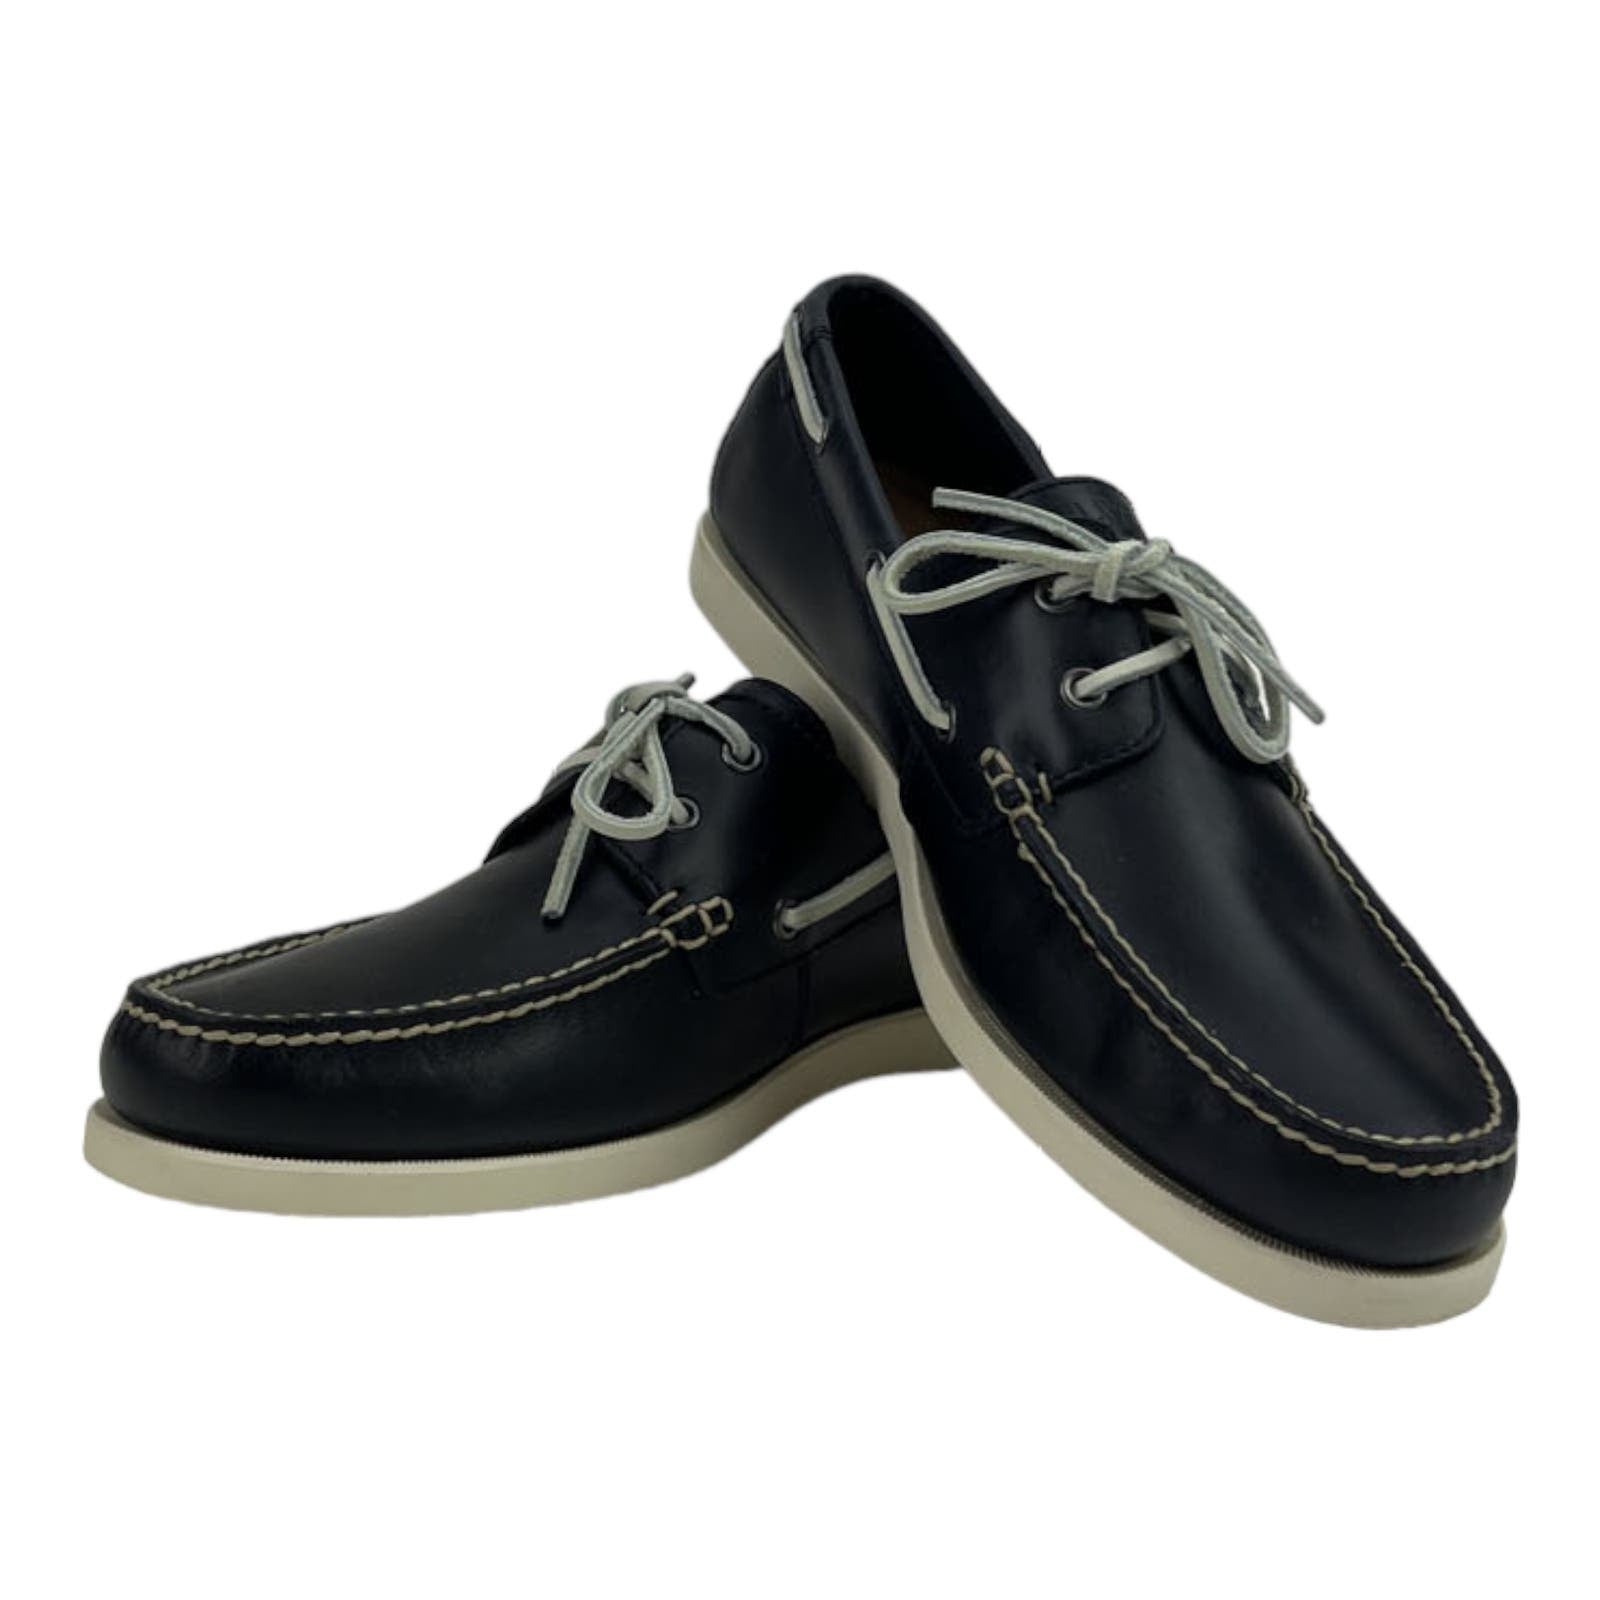 EASTLAND SEAPORT Men US 10.5 Moc Toe Navy Lace-up Leather Boat Shoes